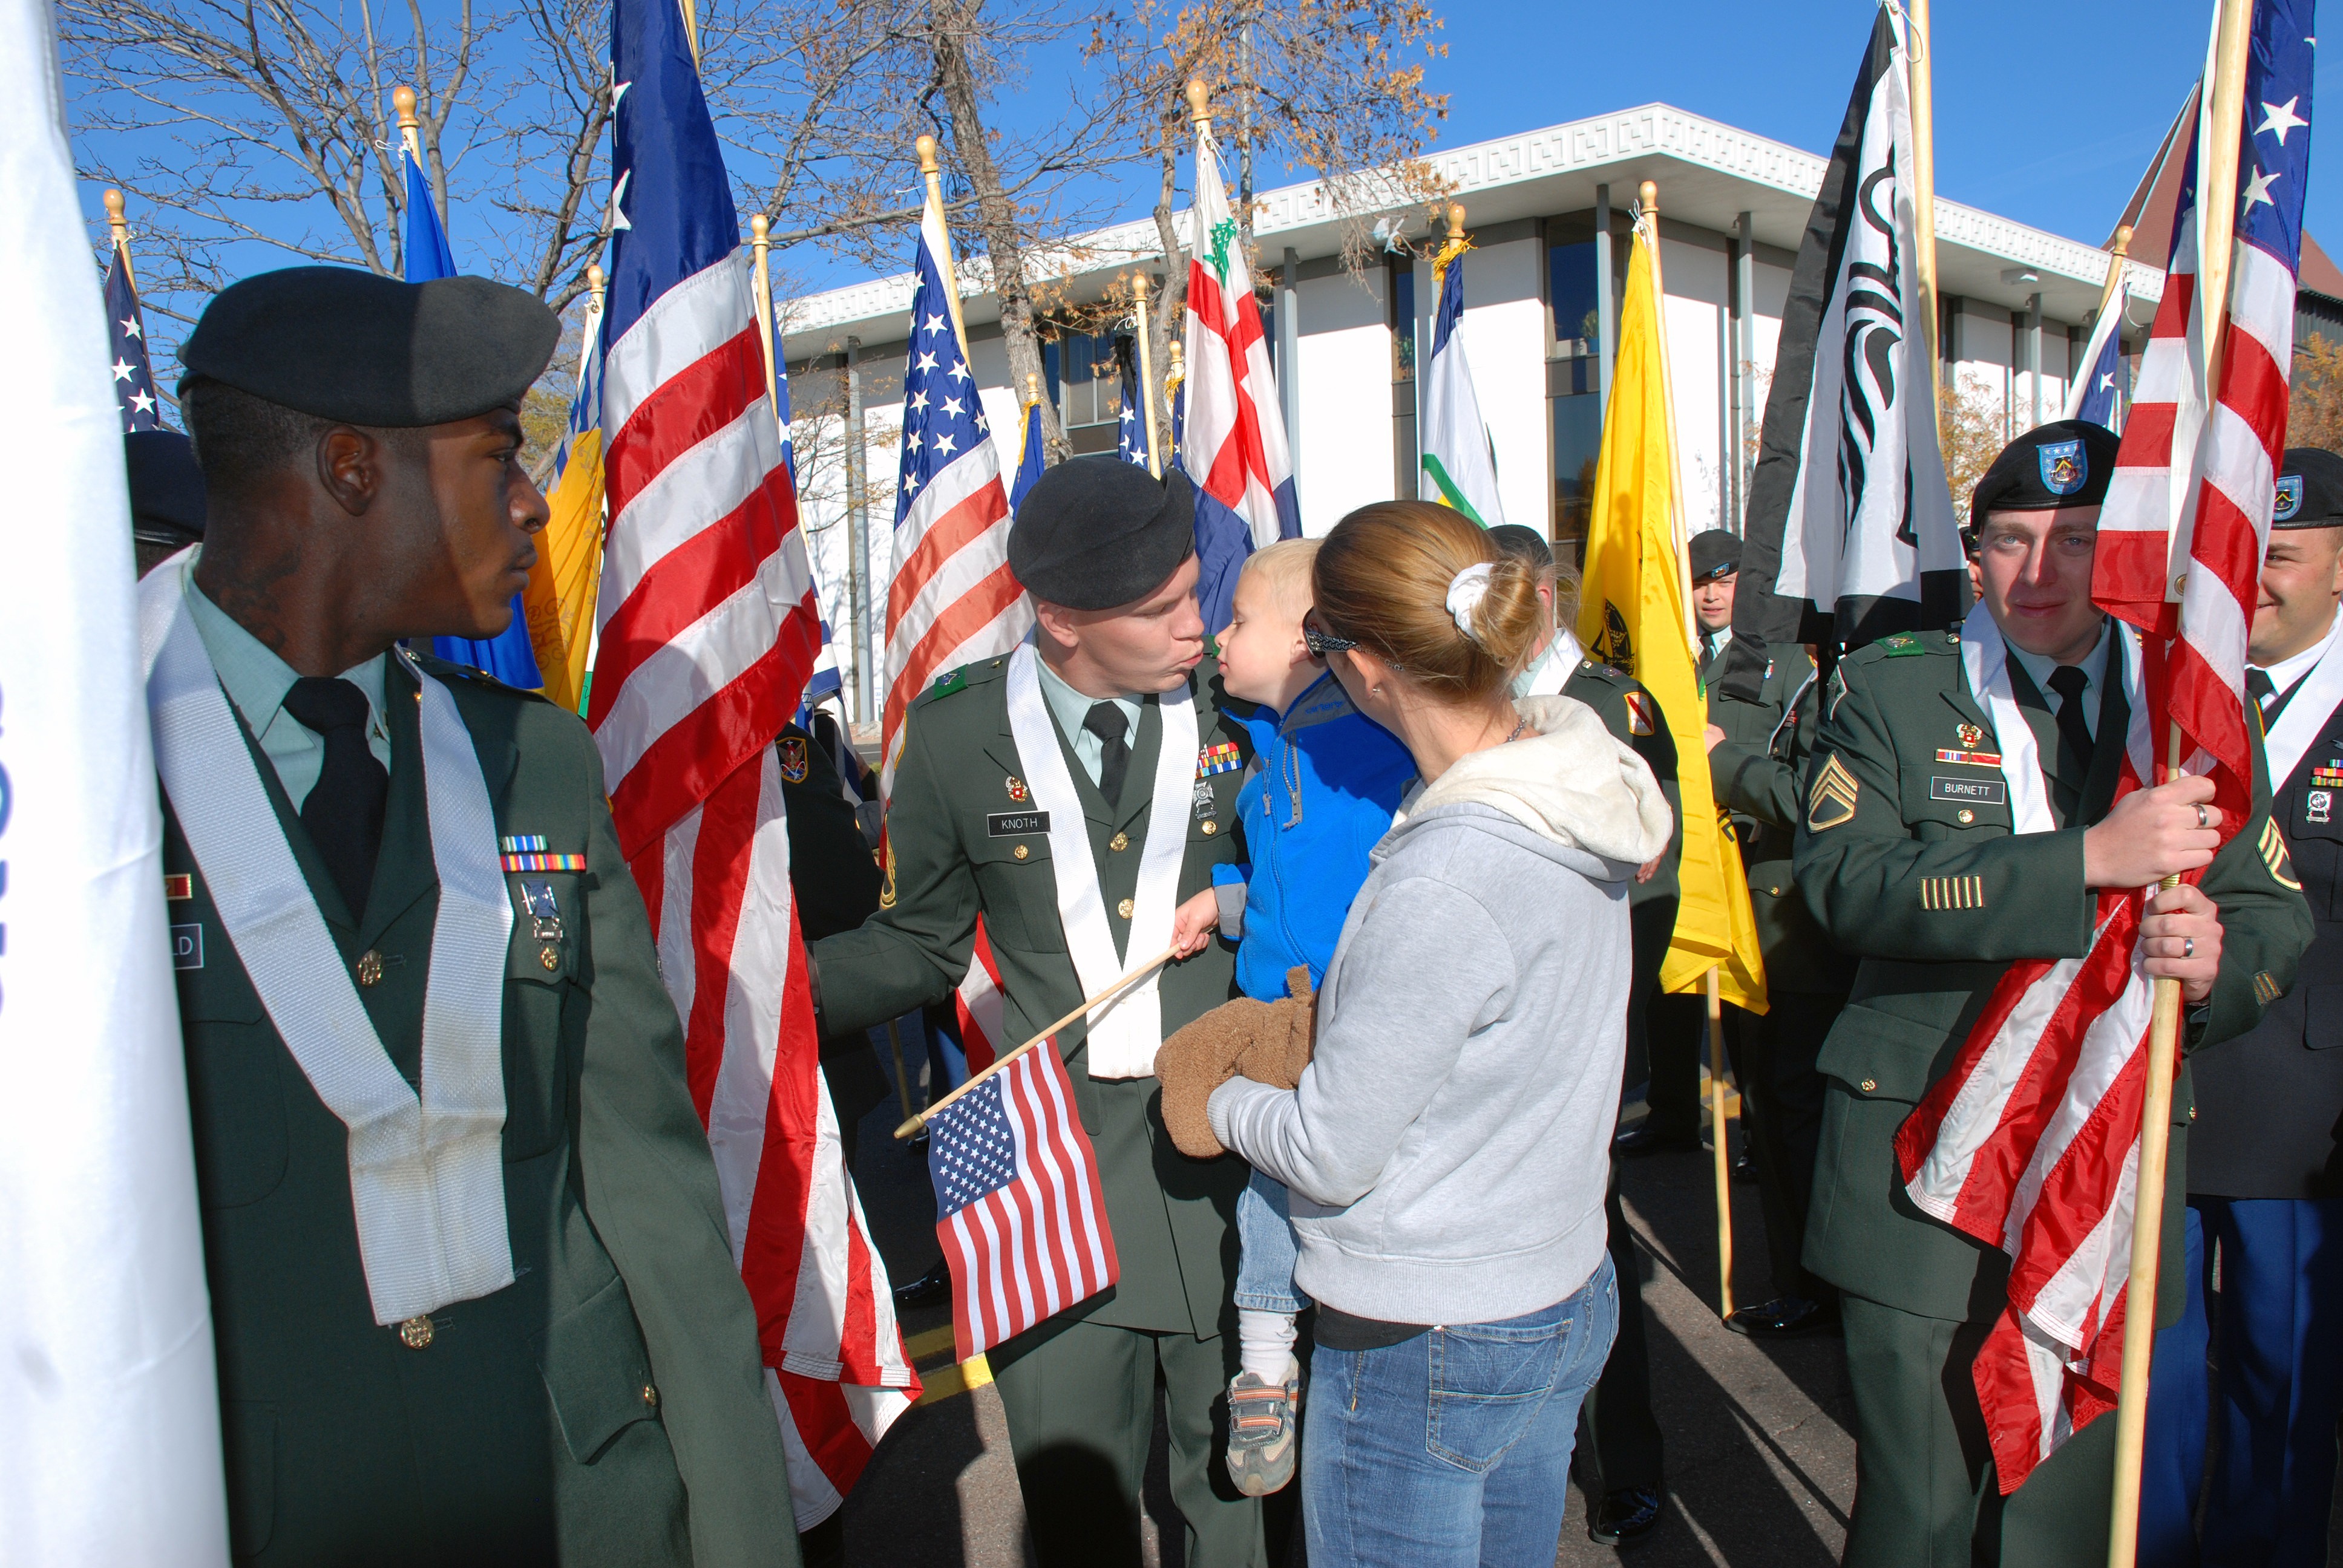 "Flight of Flags" Colorado Springs Veteran's Day Parade Article The